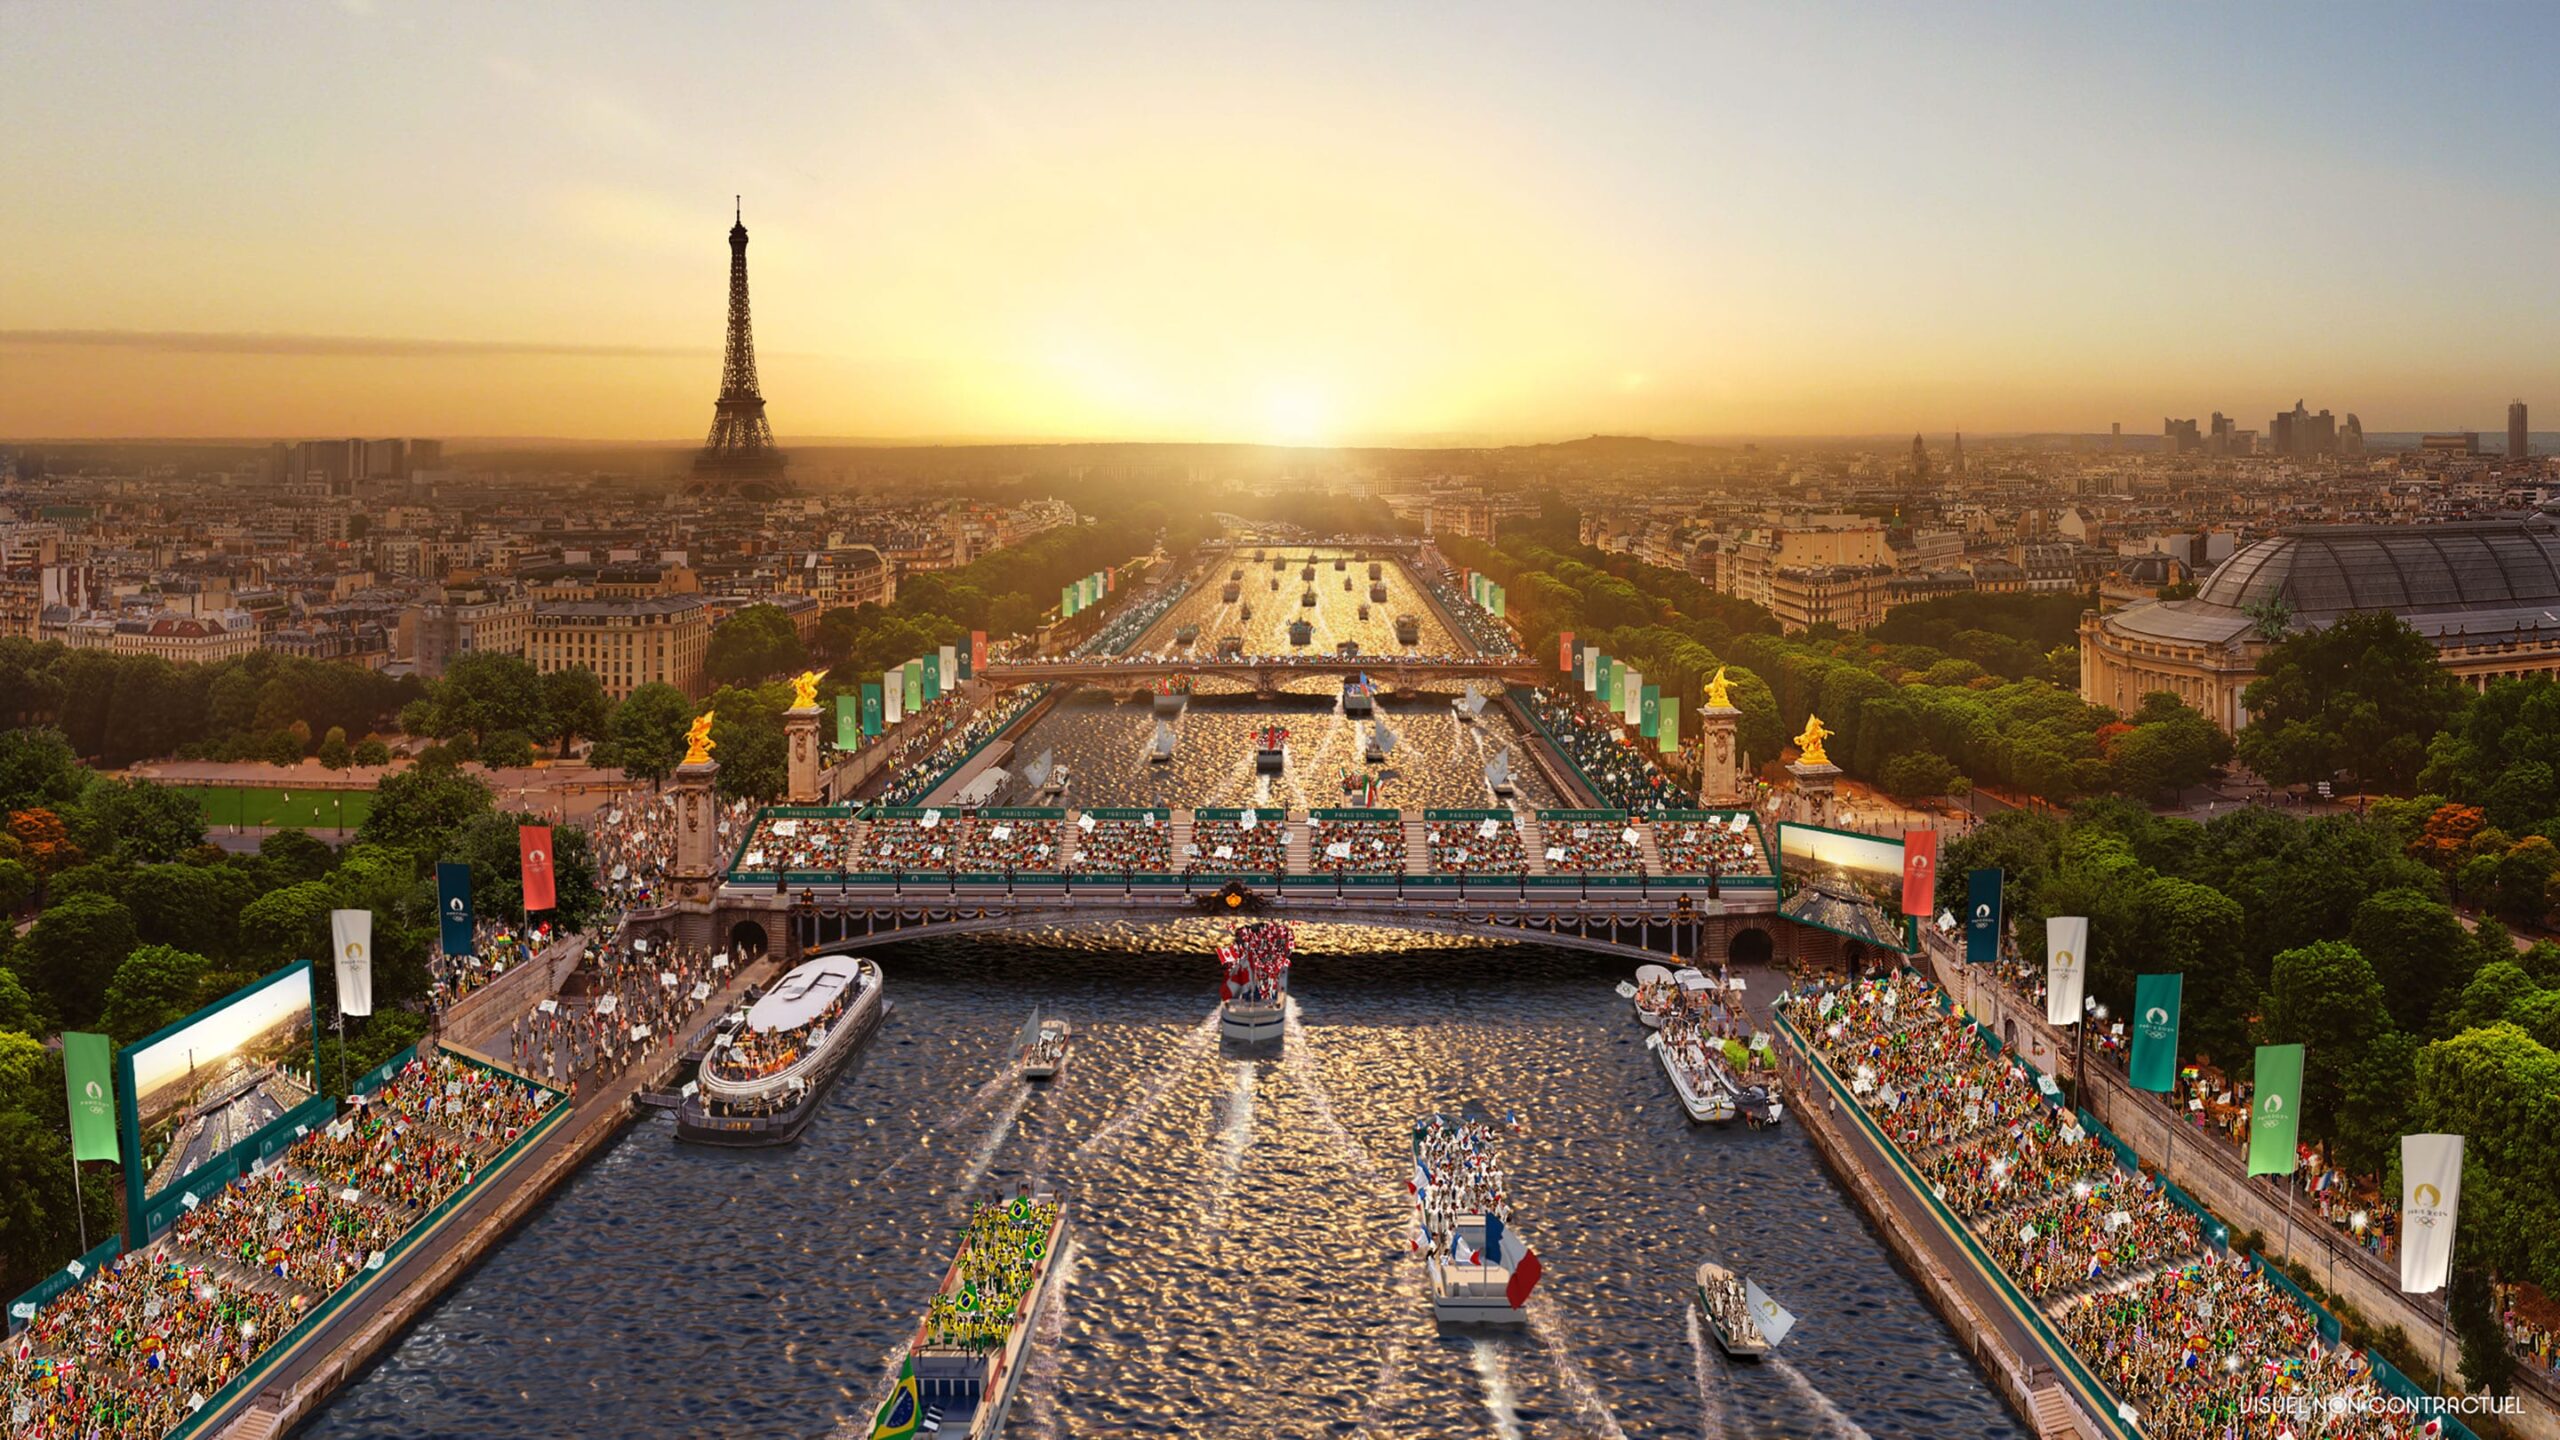 Paris 2024 Olympics opens with unique Seine River ceremony